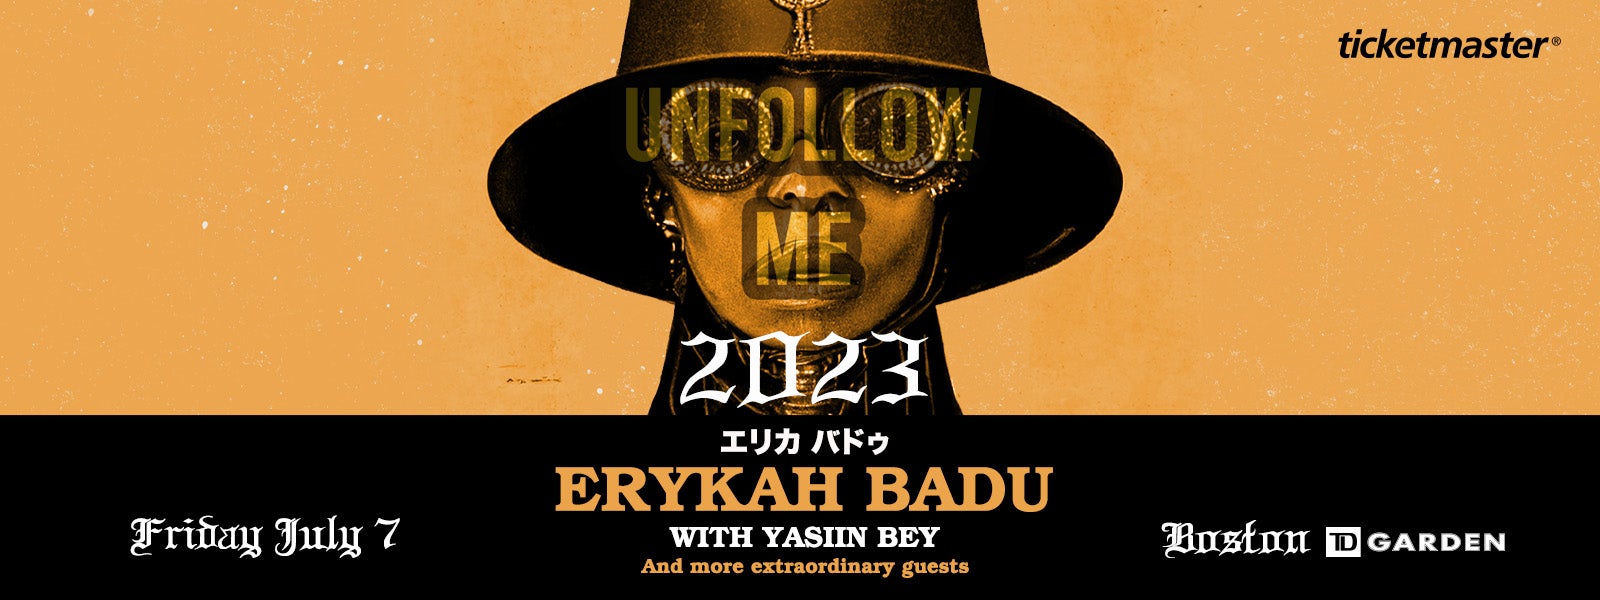 Erykah Badu Announces 2023 'Unfollow Me Tour' With Yasiin Bey